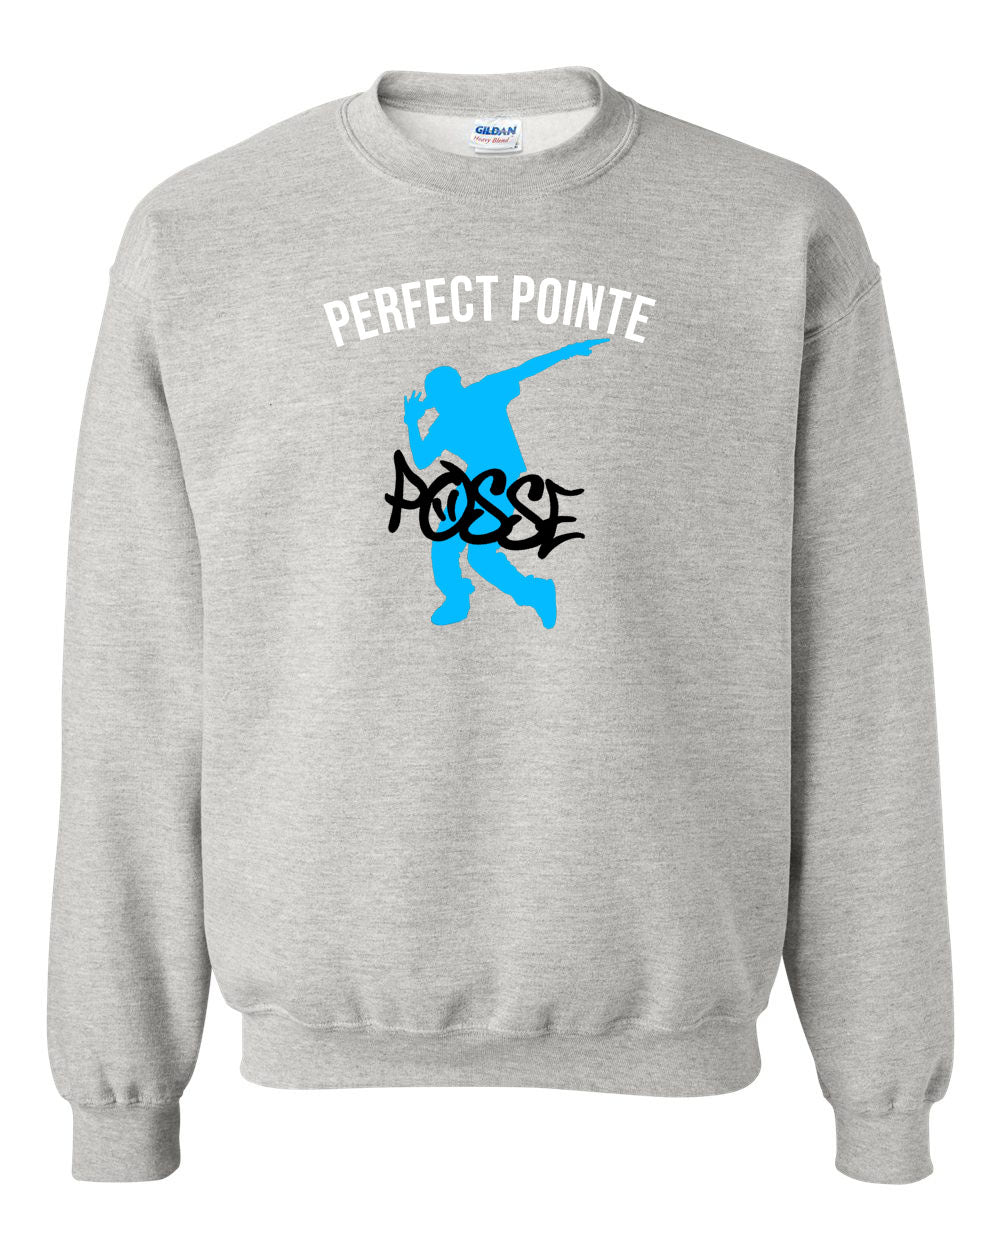 Perfect Pointe Design 7 non hooded sweatshirt